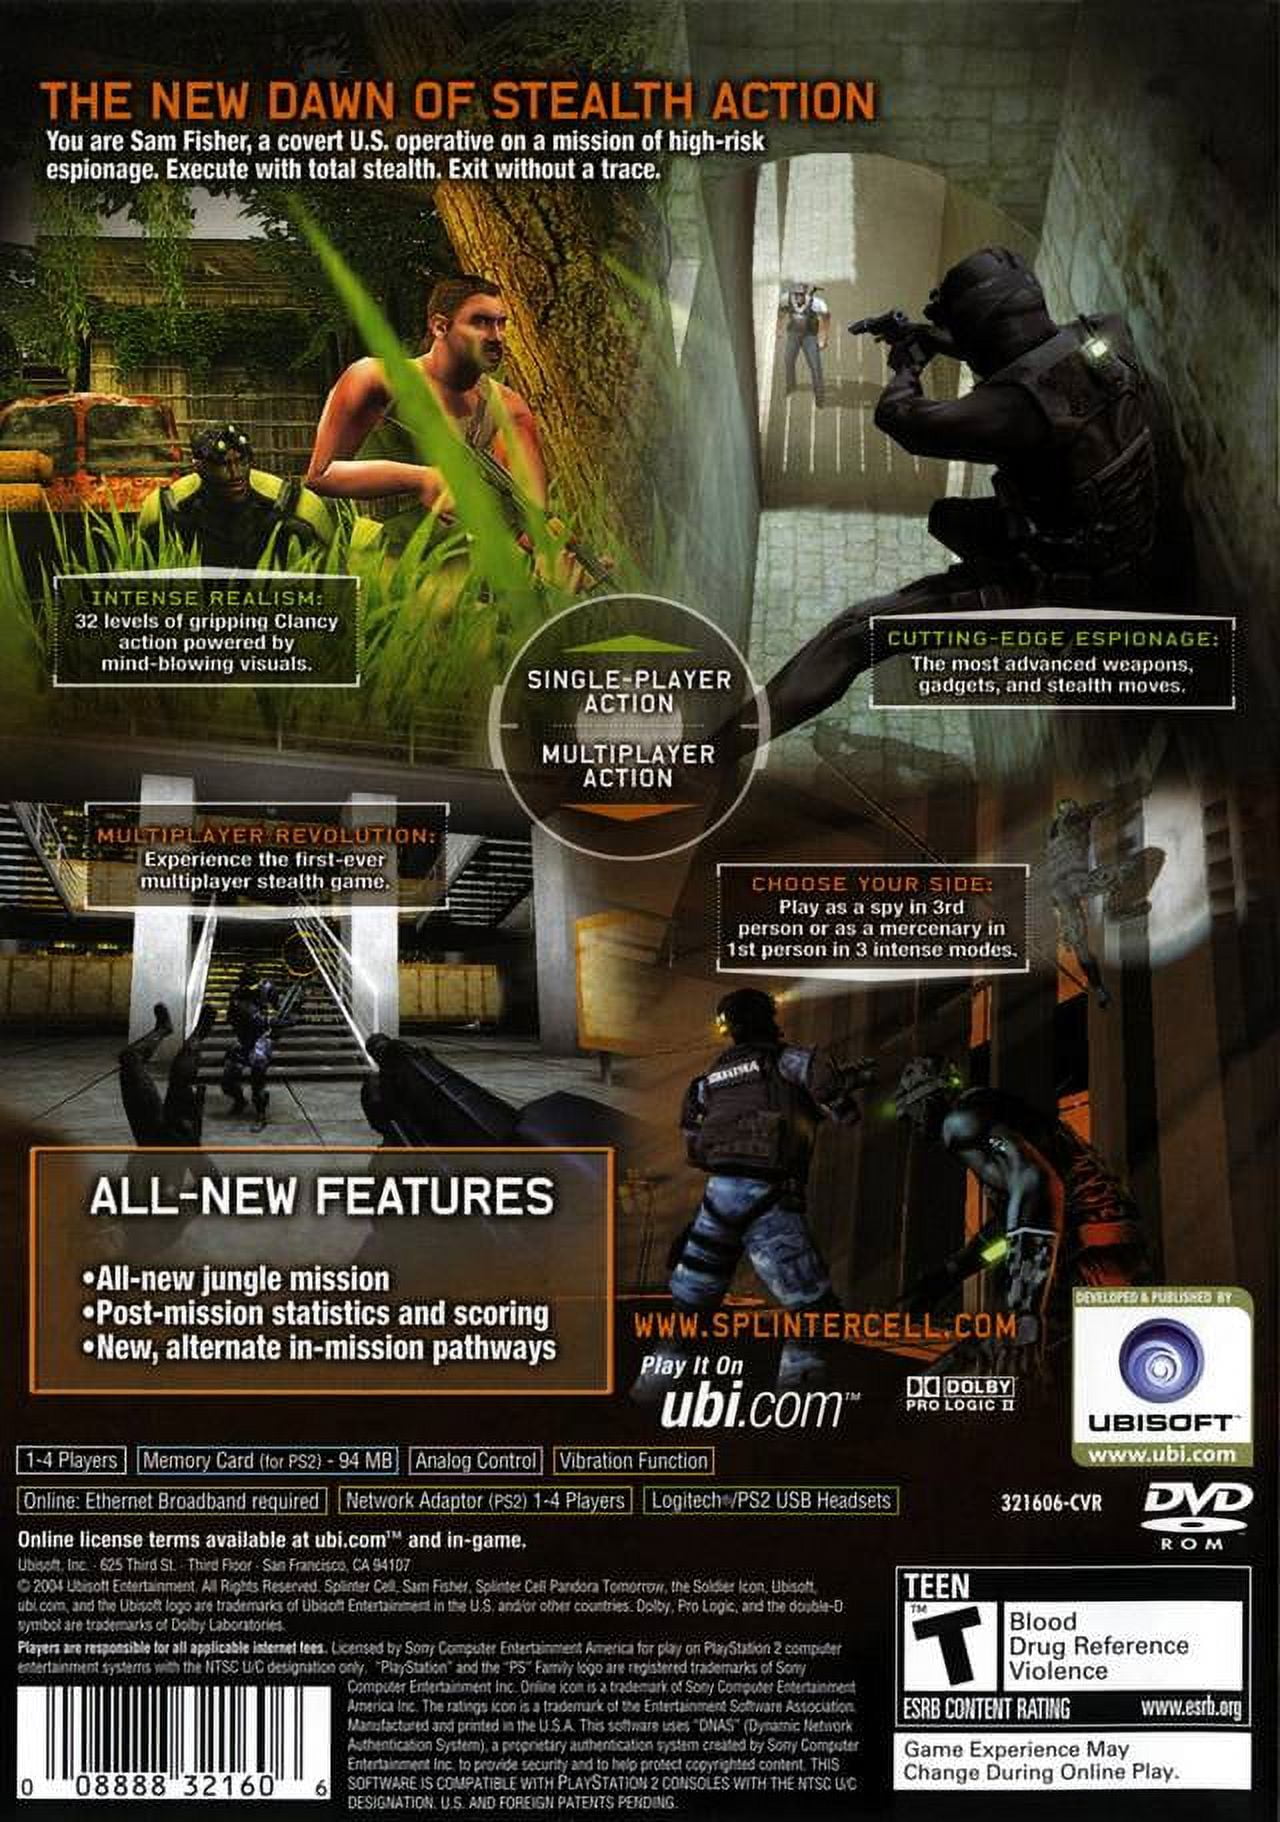 Tom Clancy's Splinter Cell: Pandora Tomorrow, PS2